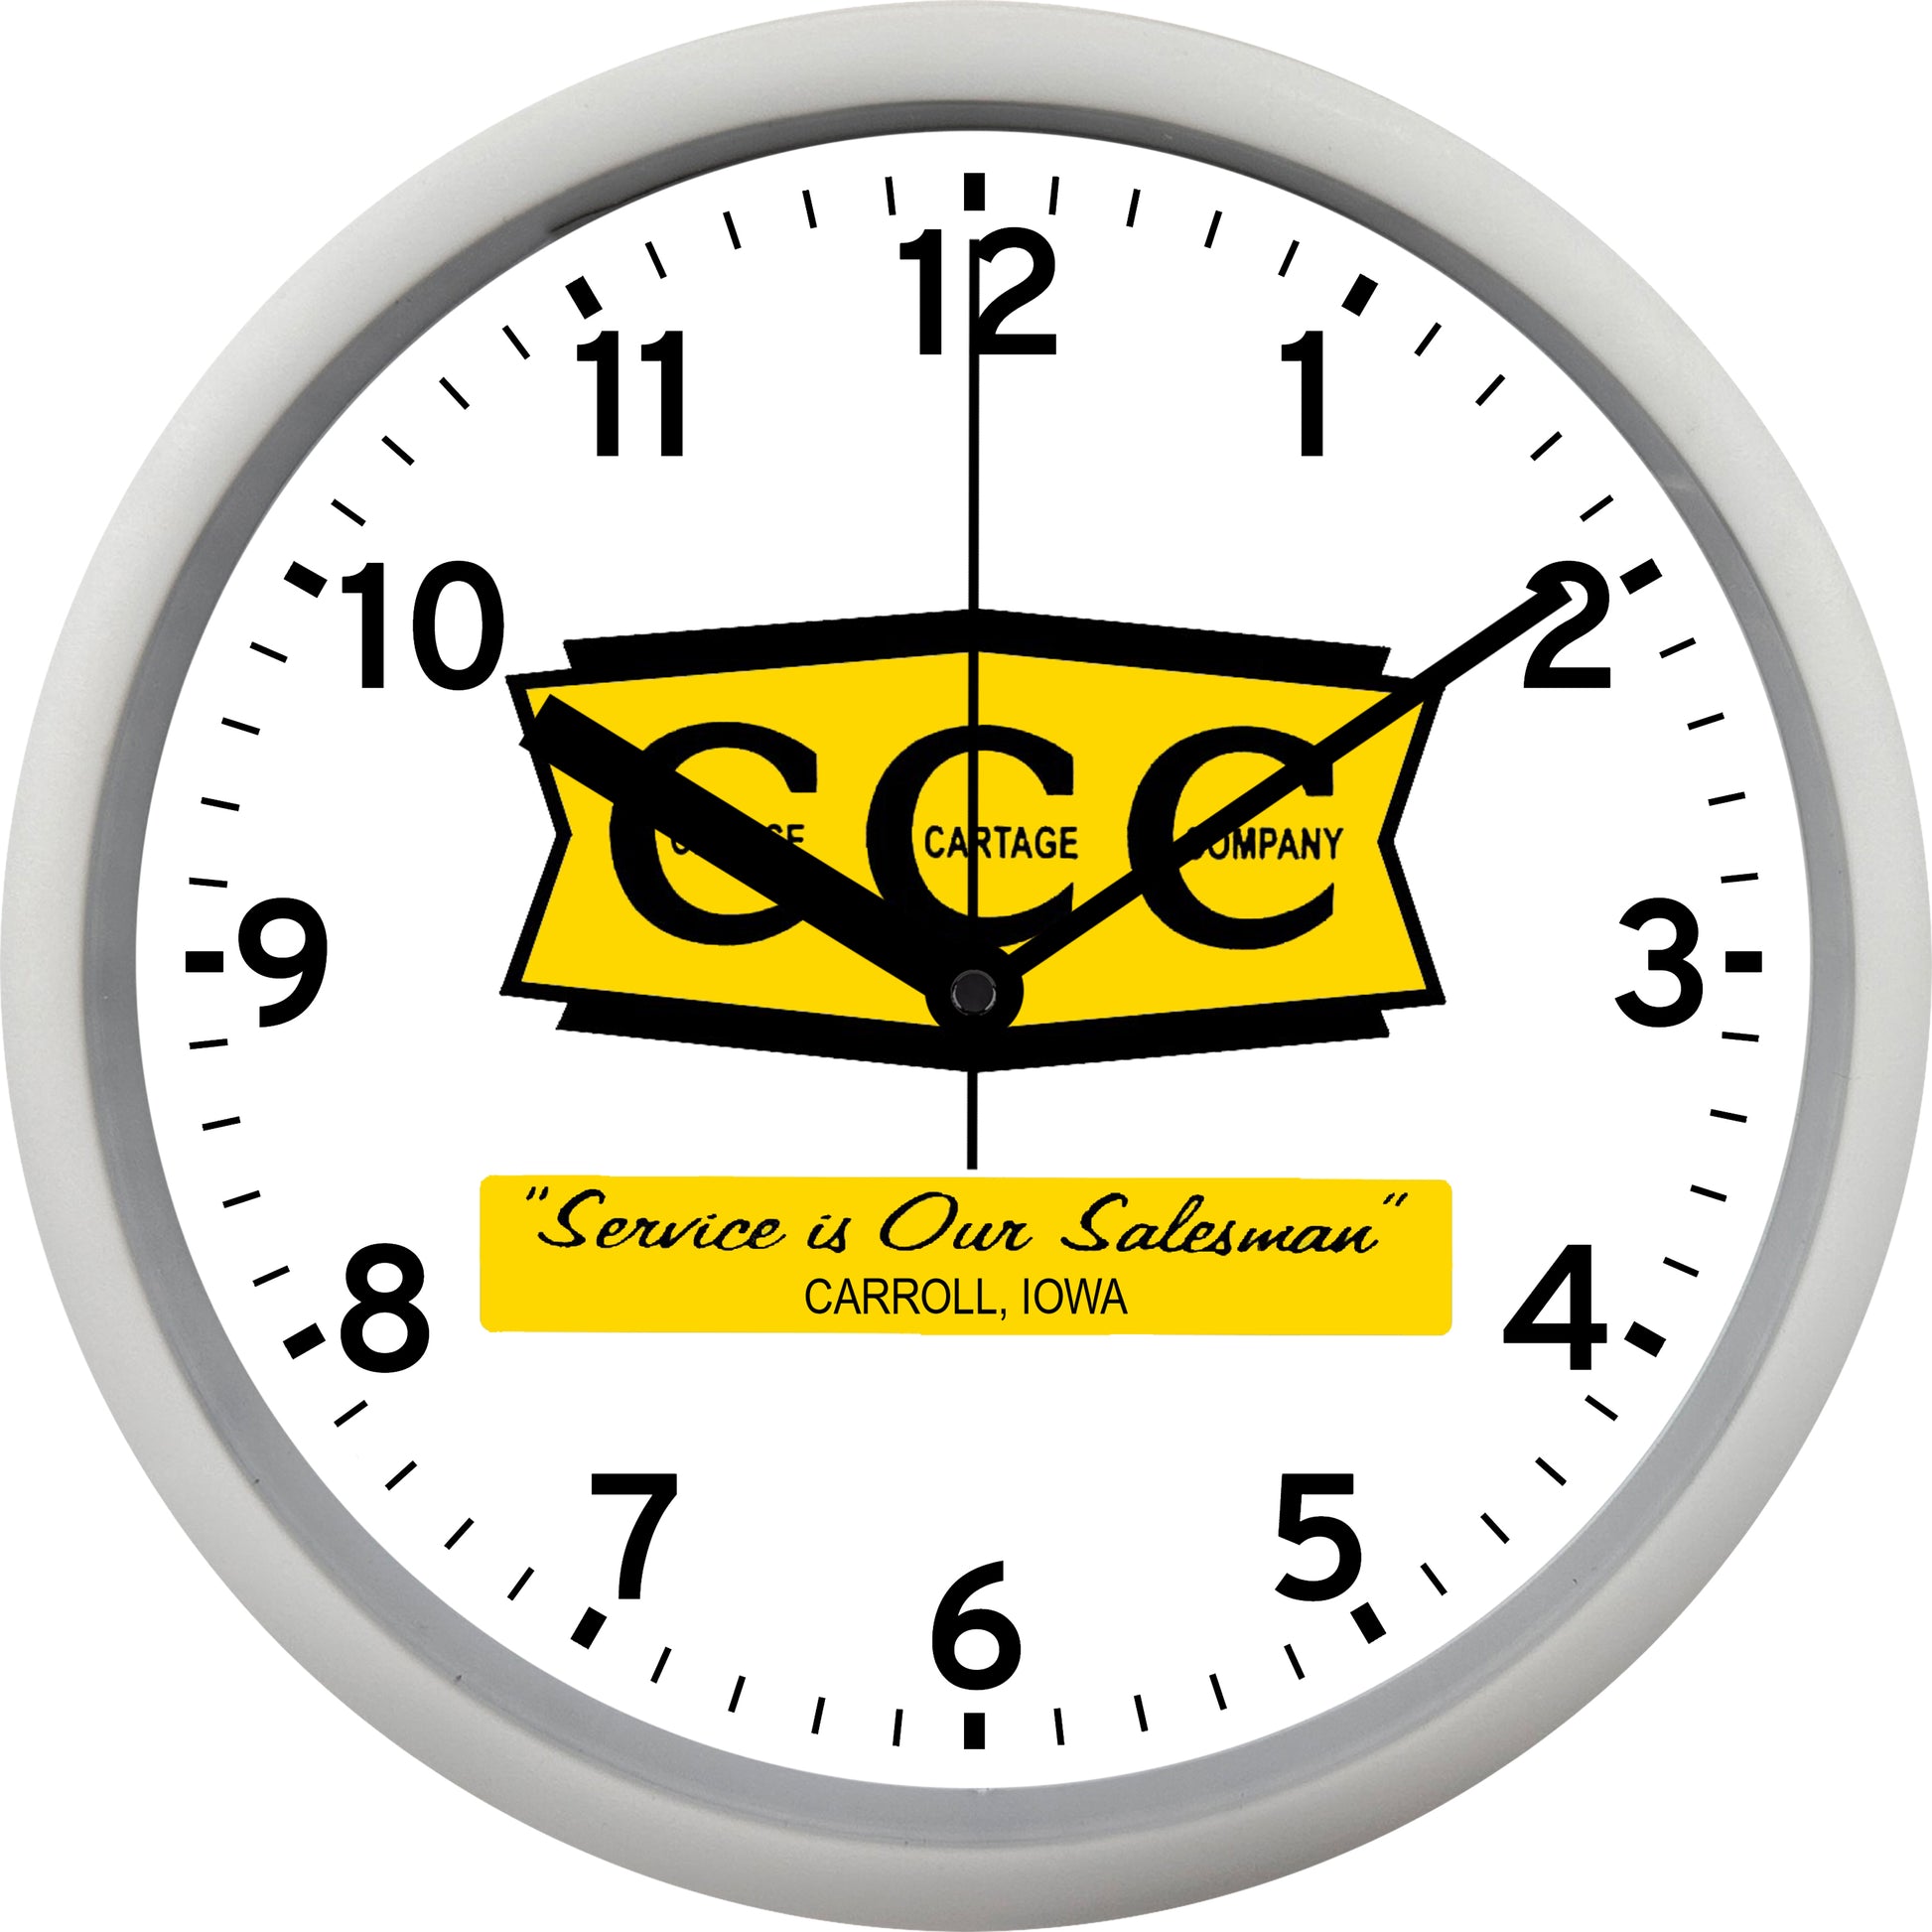 Crouse Cartage Company - "CCC" Wall Clock